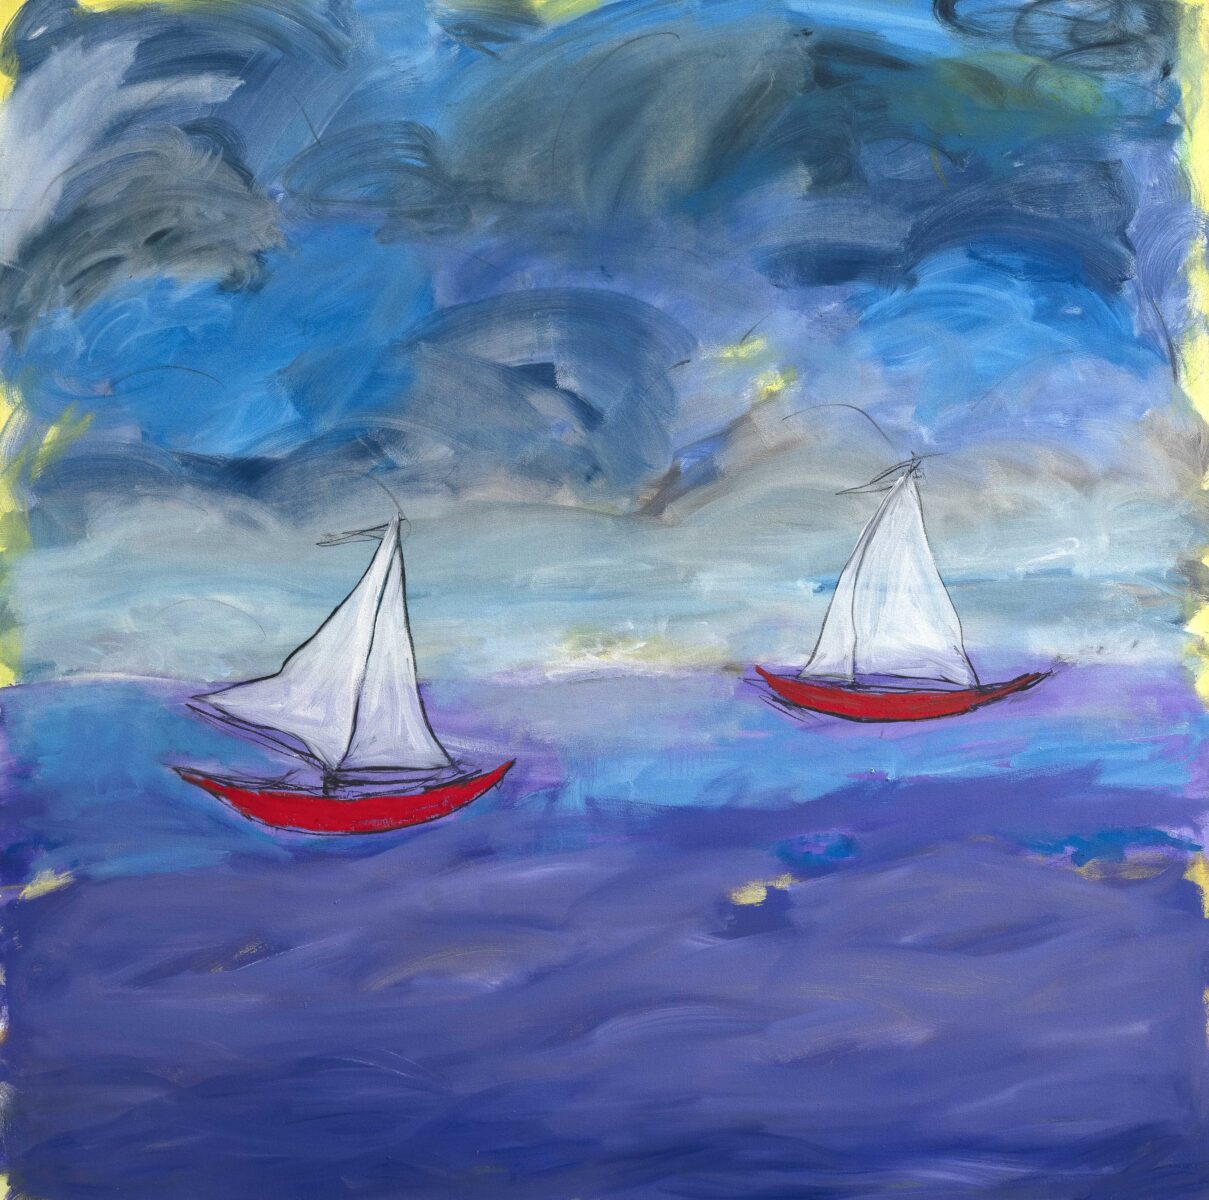 White Sails | Sue Gill | oil on canvas | 140 x 140 cm | $4,500 Photo documentation by Christine Hall Photographer